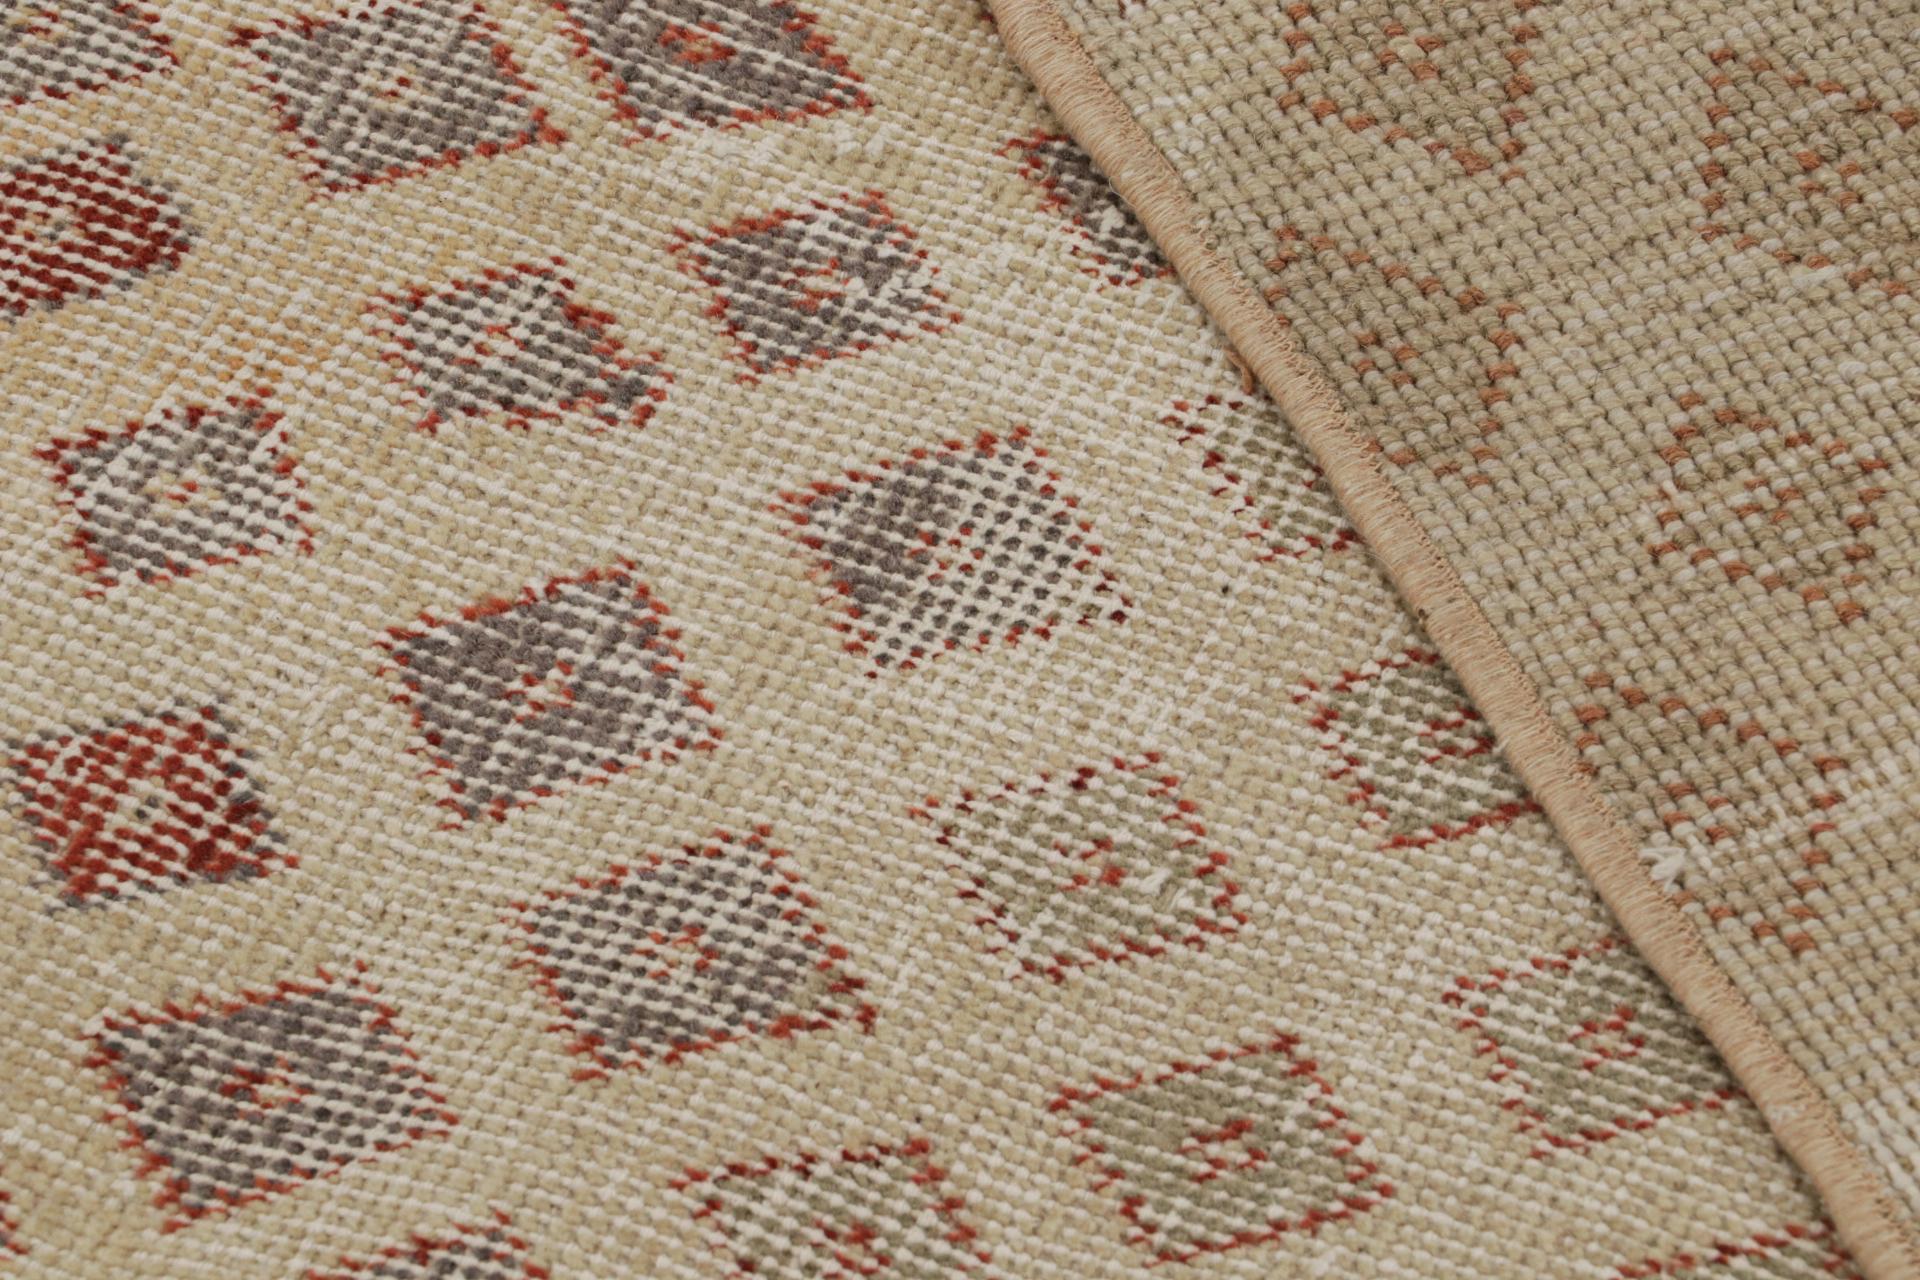 Wool Vintage Zeki Müren Rug, with All-Over Geometric patterns, from Rug & Kilim For Sale